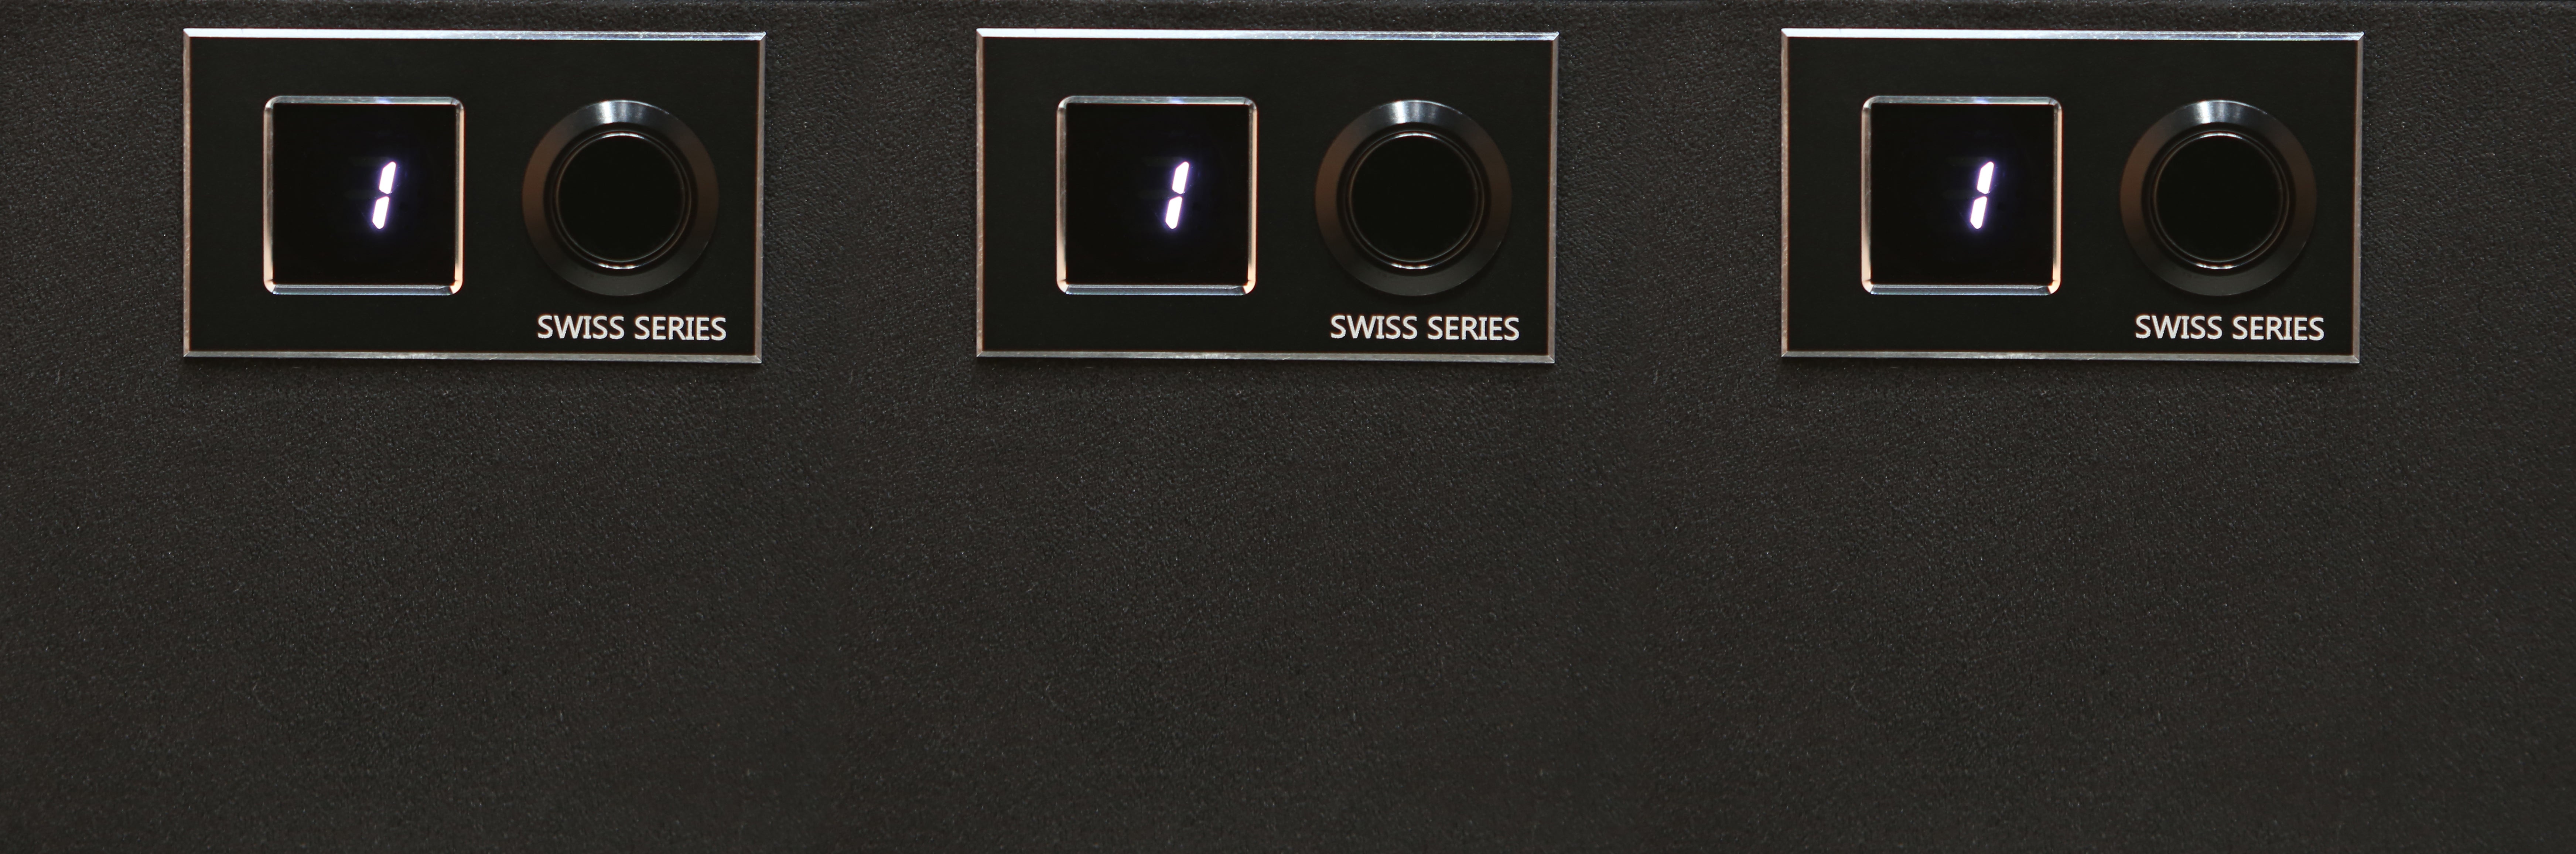 Swiss Series 3.20 B